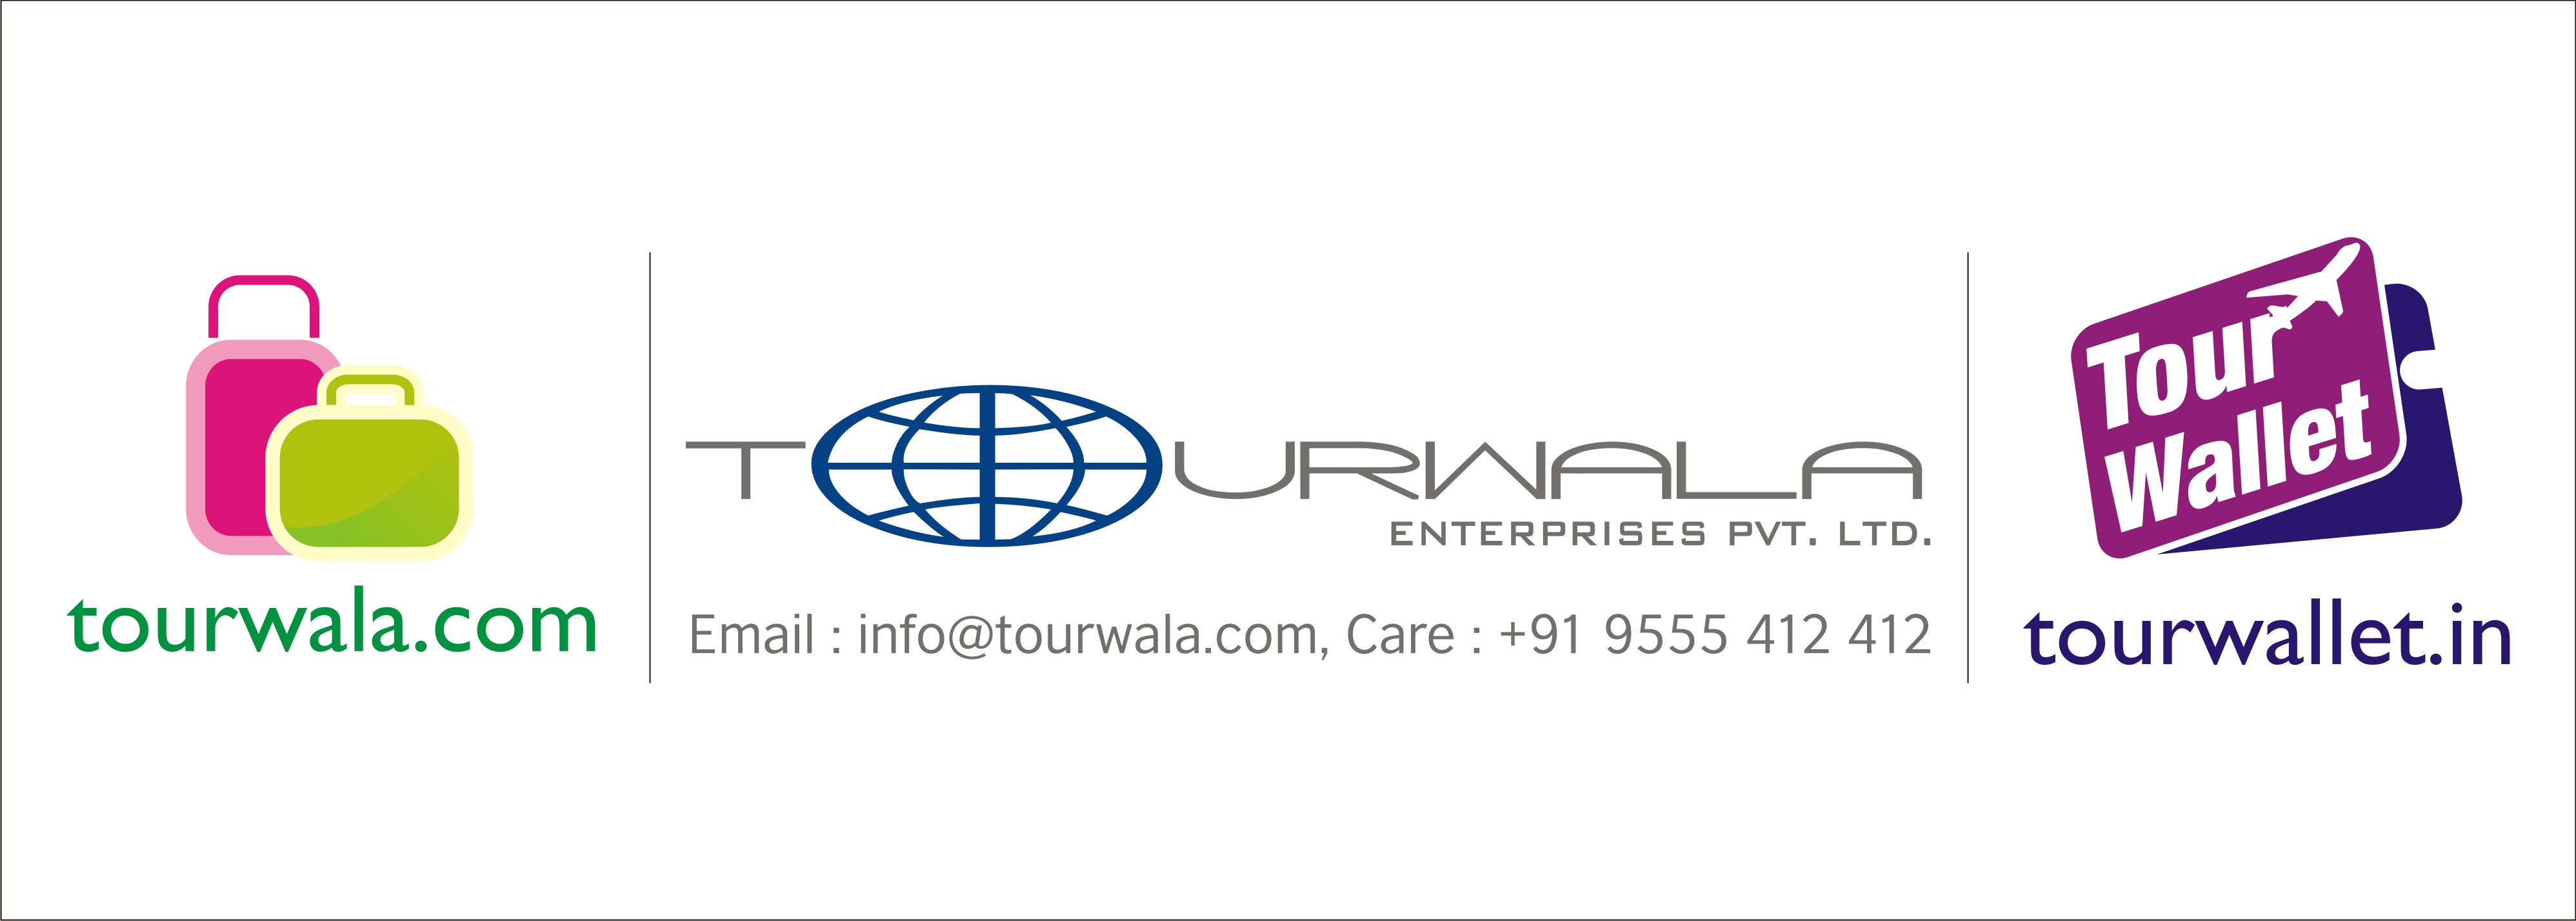 Tourwala Enterprises Pvt. Ltd. 